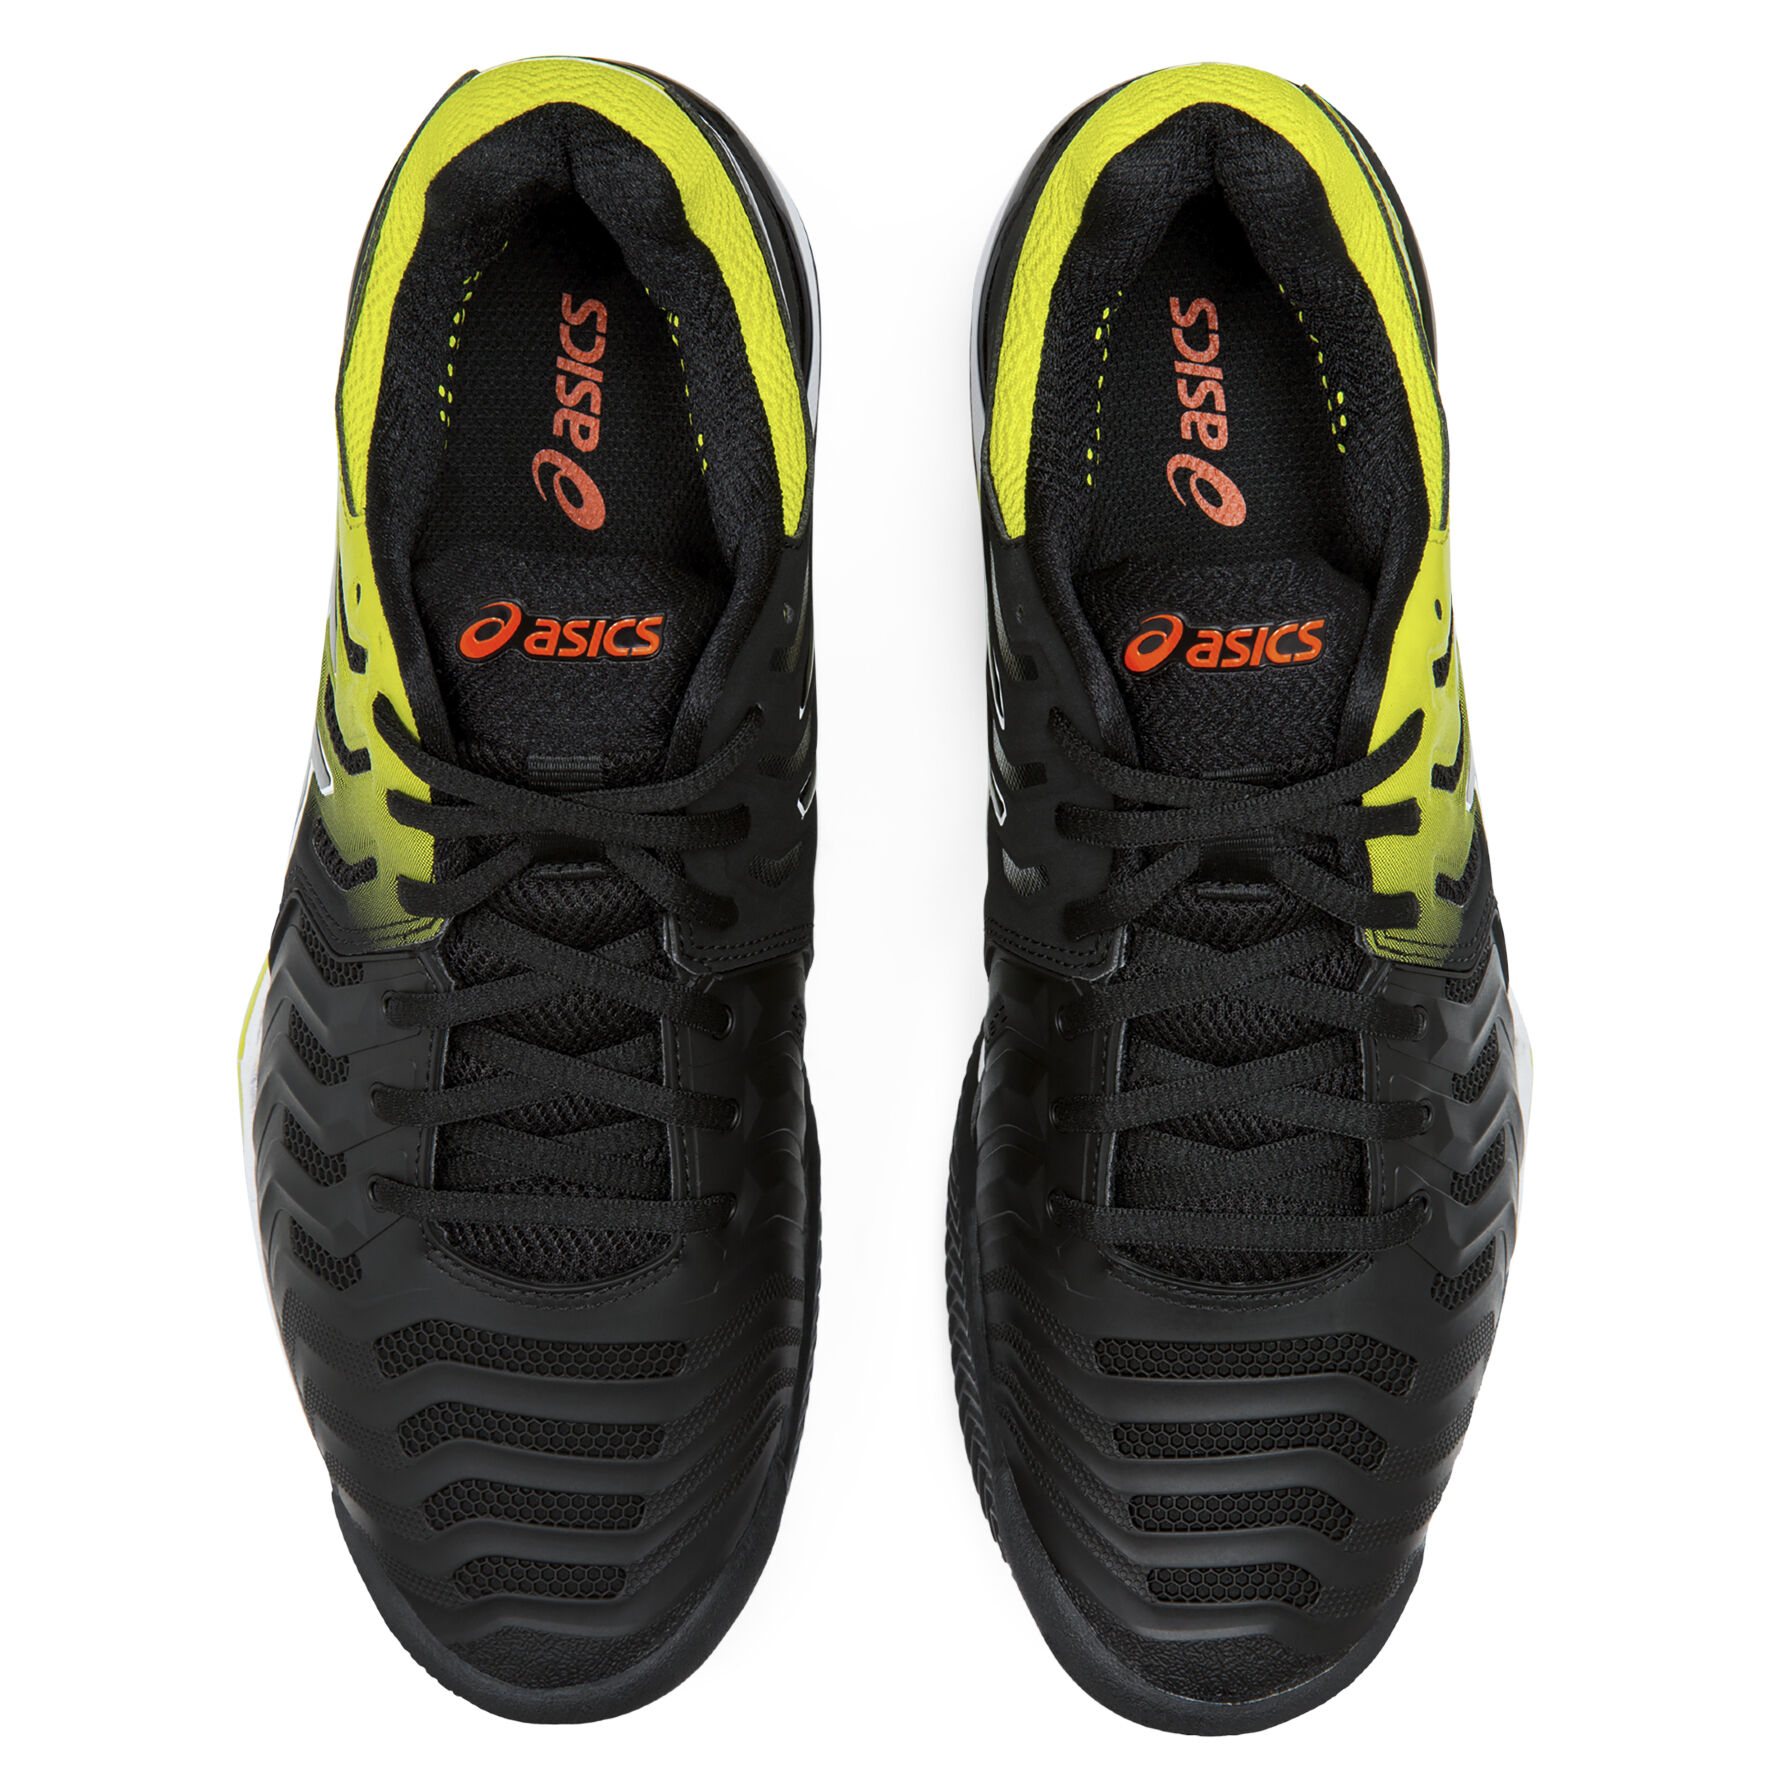 asics gel resolution 7 black/yellow/orange men's shoes